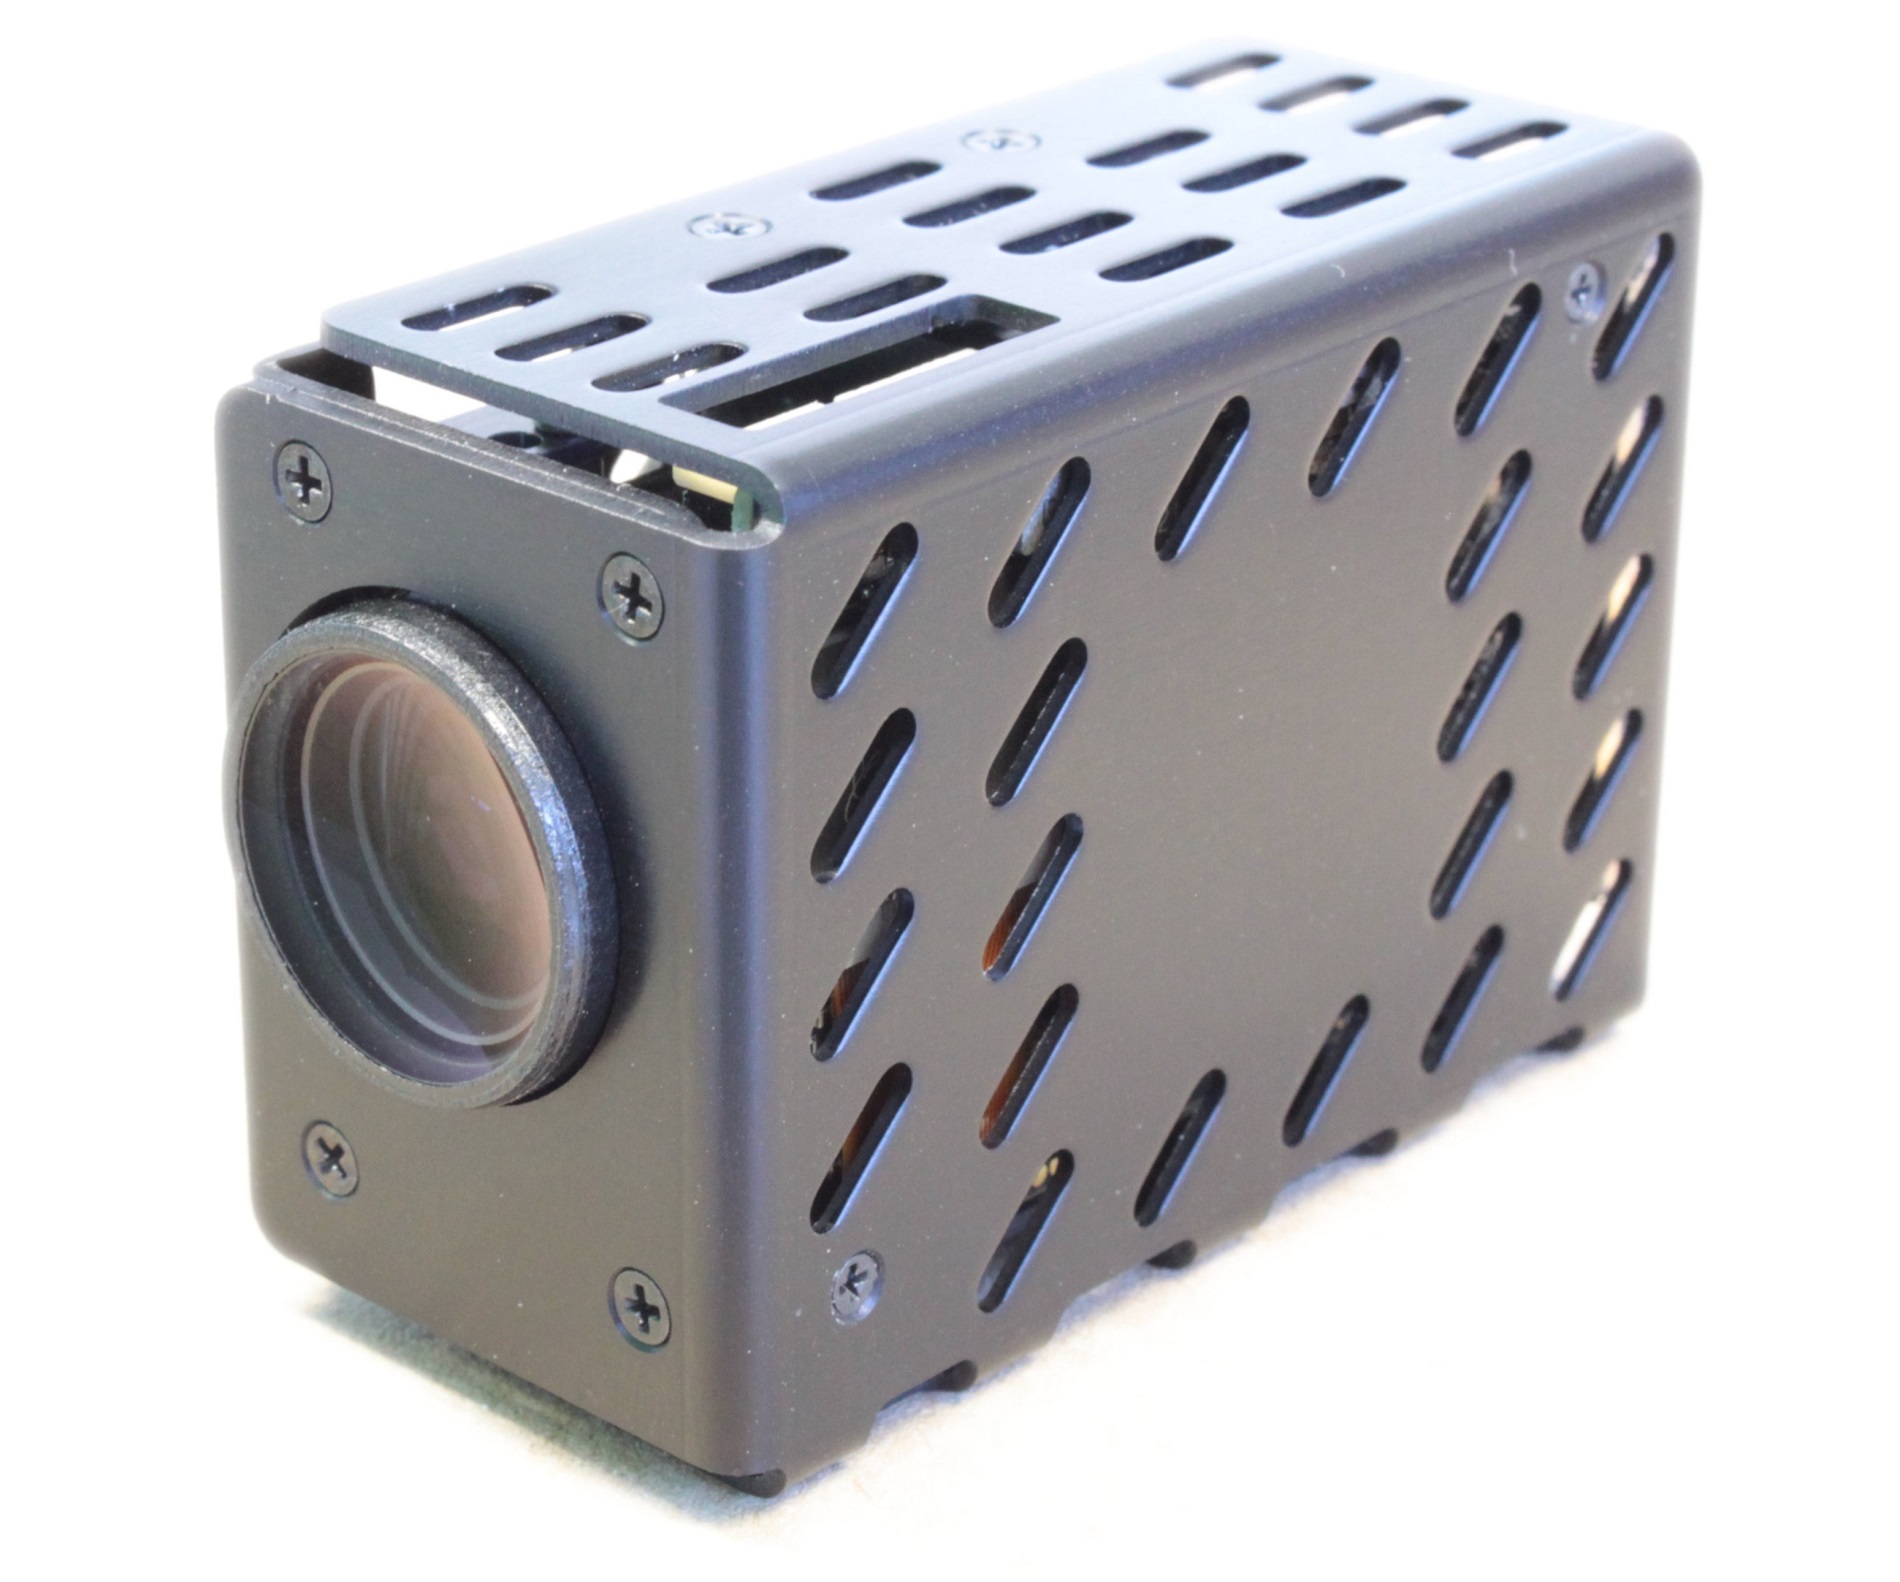 The UC-310 camera